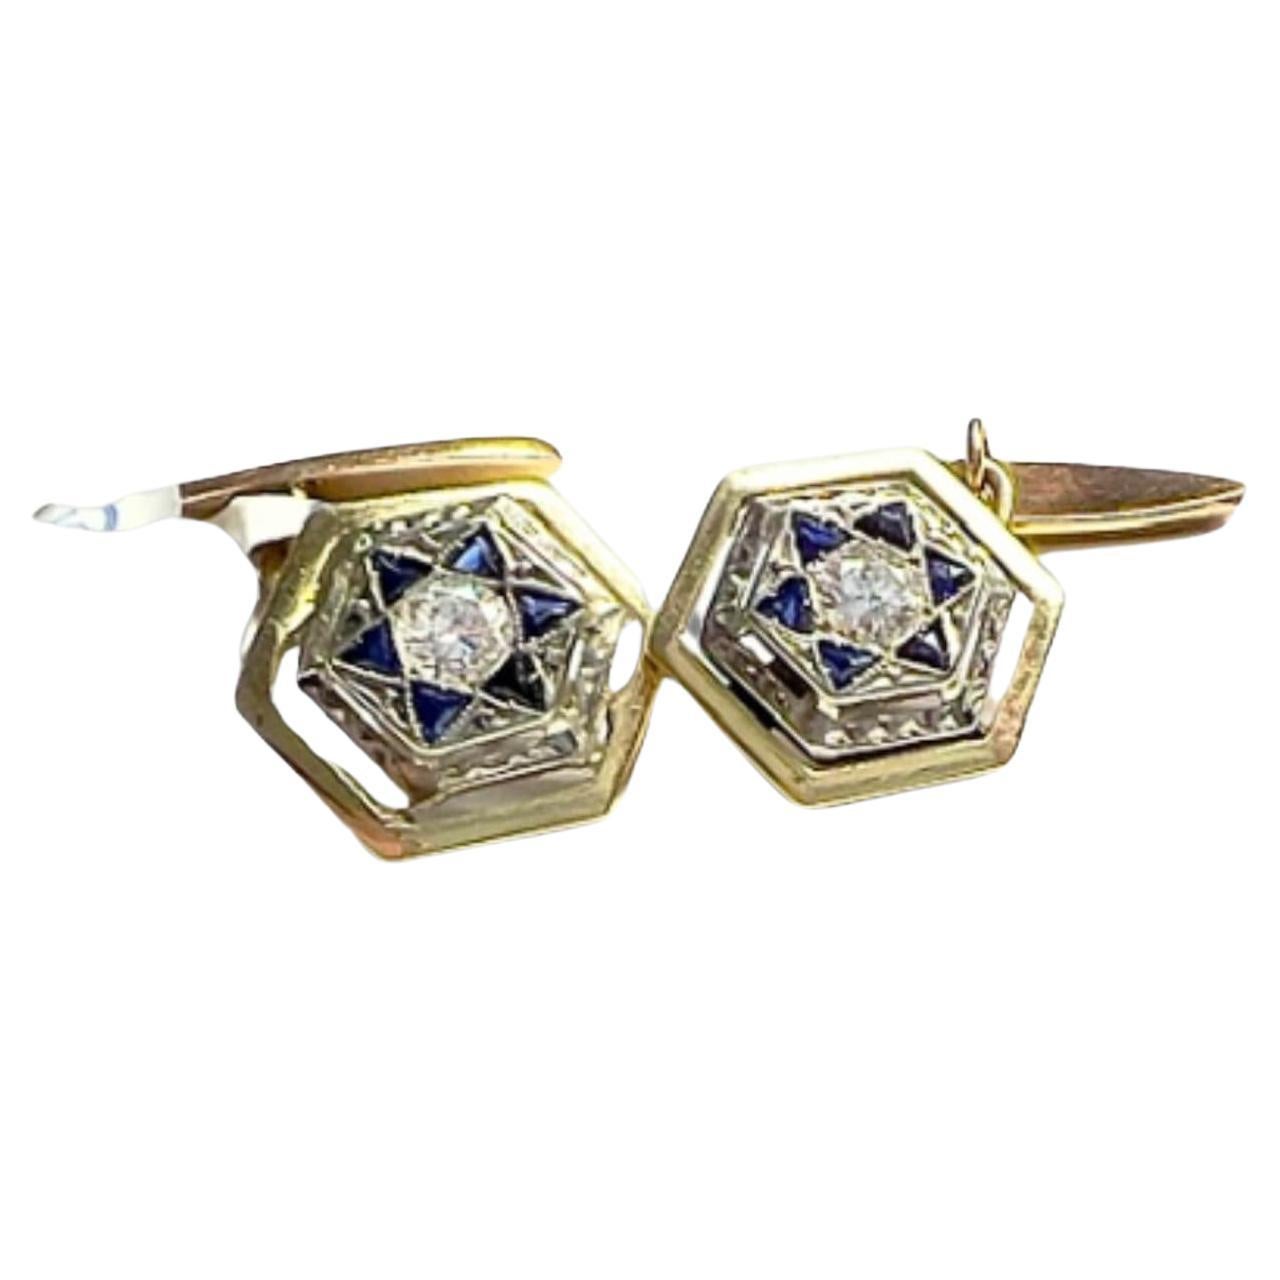 Art Deco Period Diamond and Sapphire in 18k Gold and Platinum Cufflinks